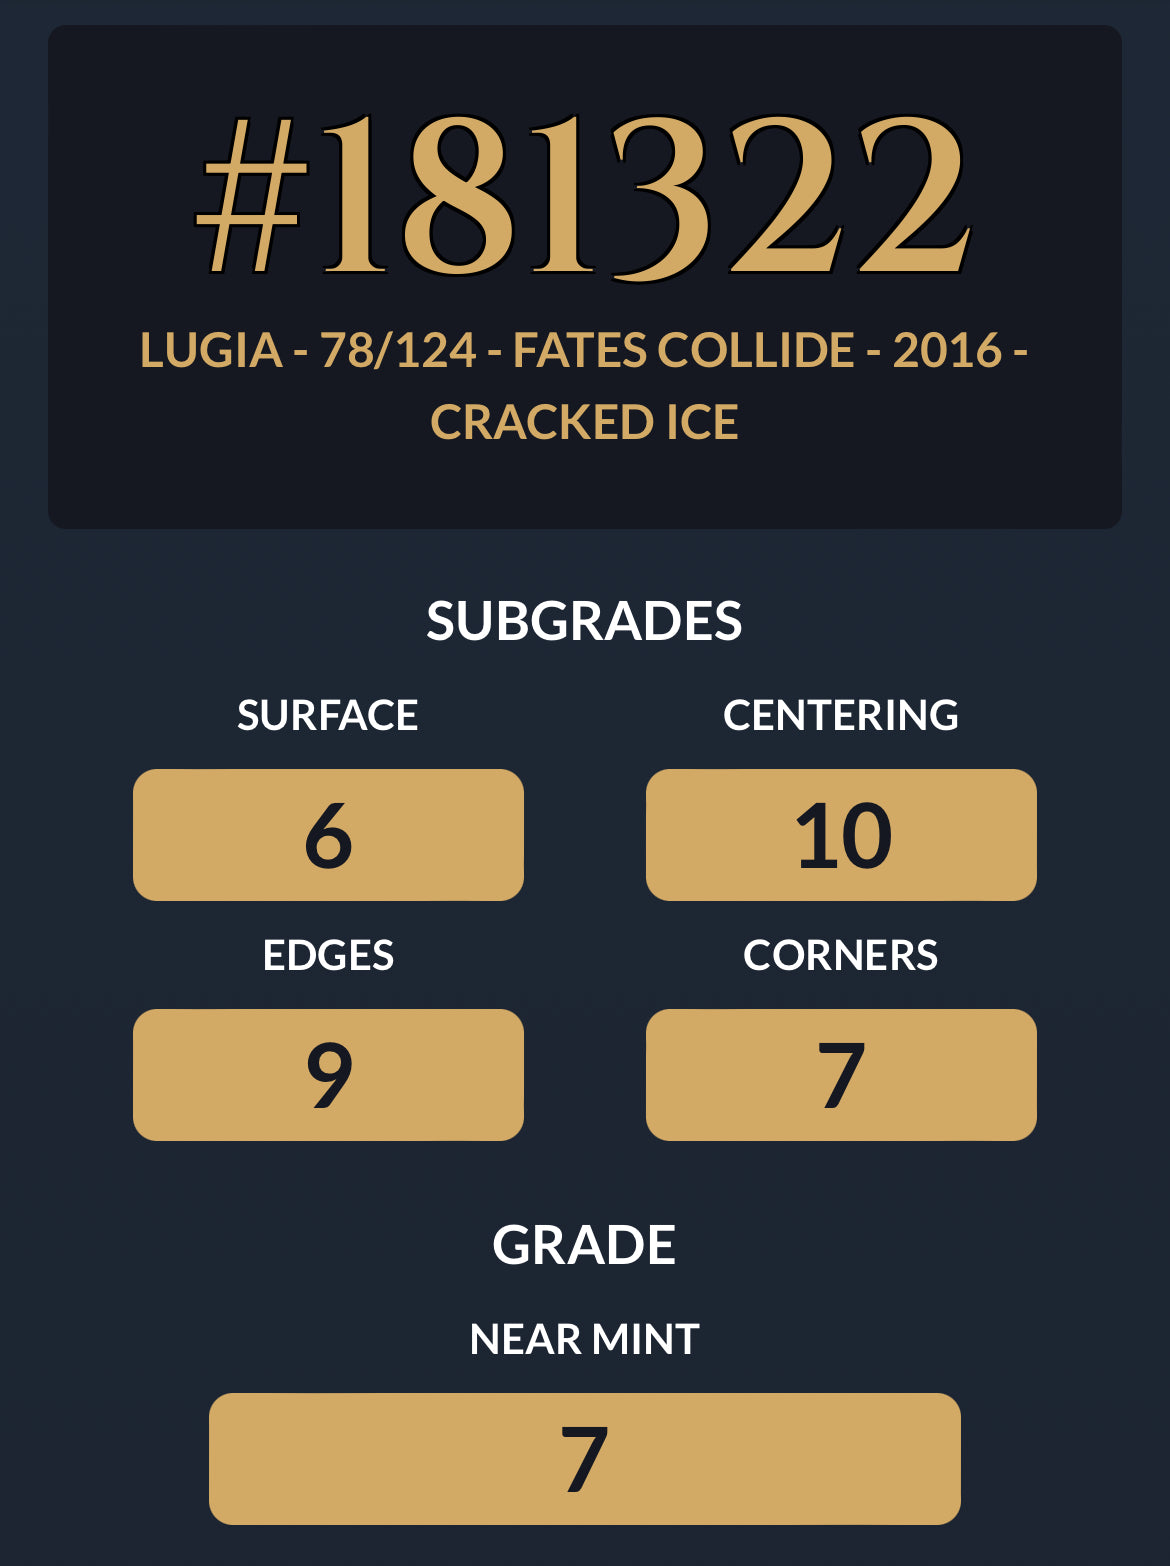 LUGIA CRACKED ICE 78/124 (7 NEAR MINT)